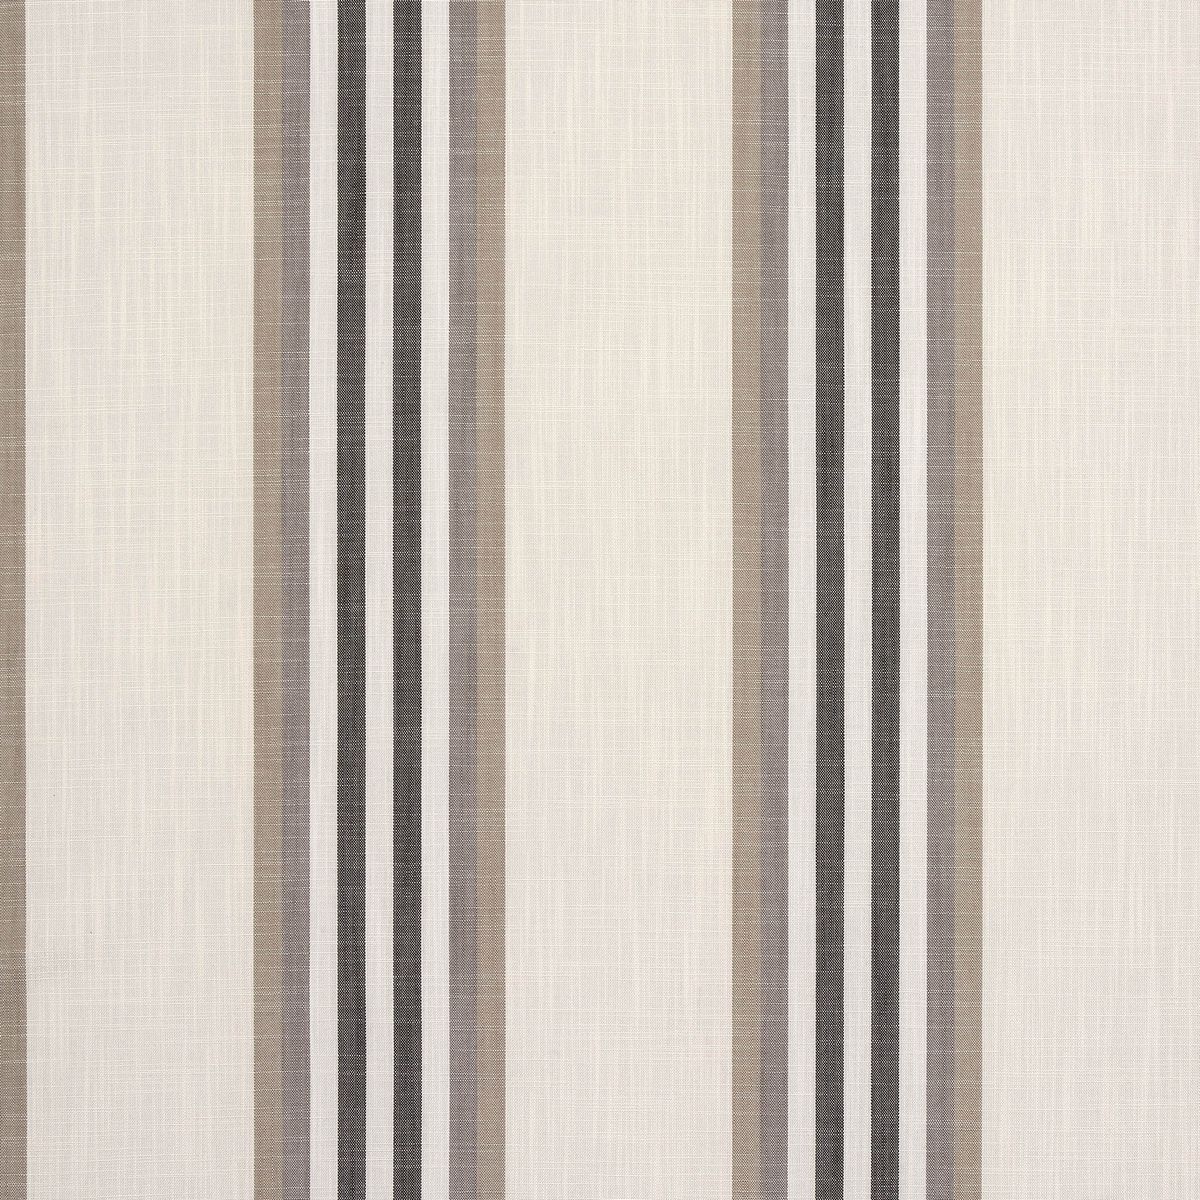 Manali Stripe Natural Fabric by Porter & Stone